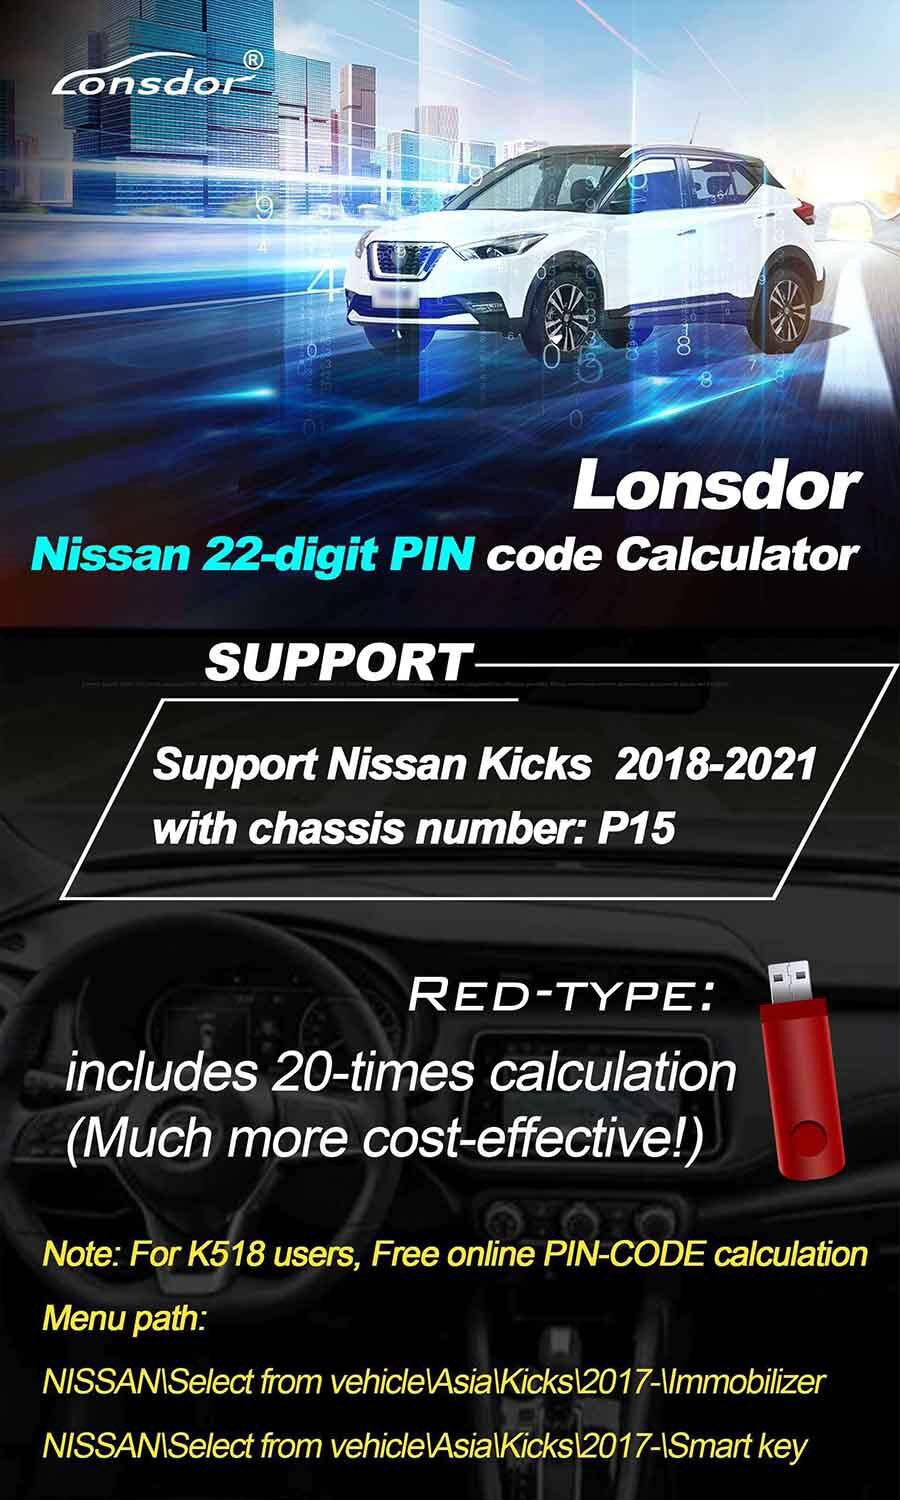 Lonsdor Nissan 22-digit PIN Code Calculator